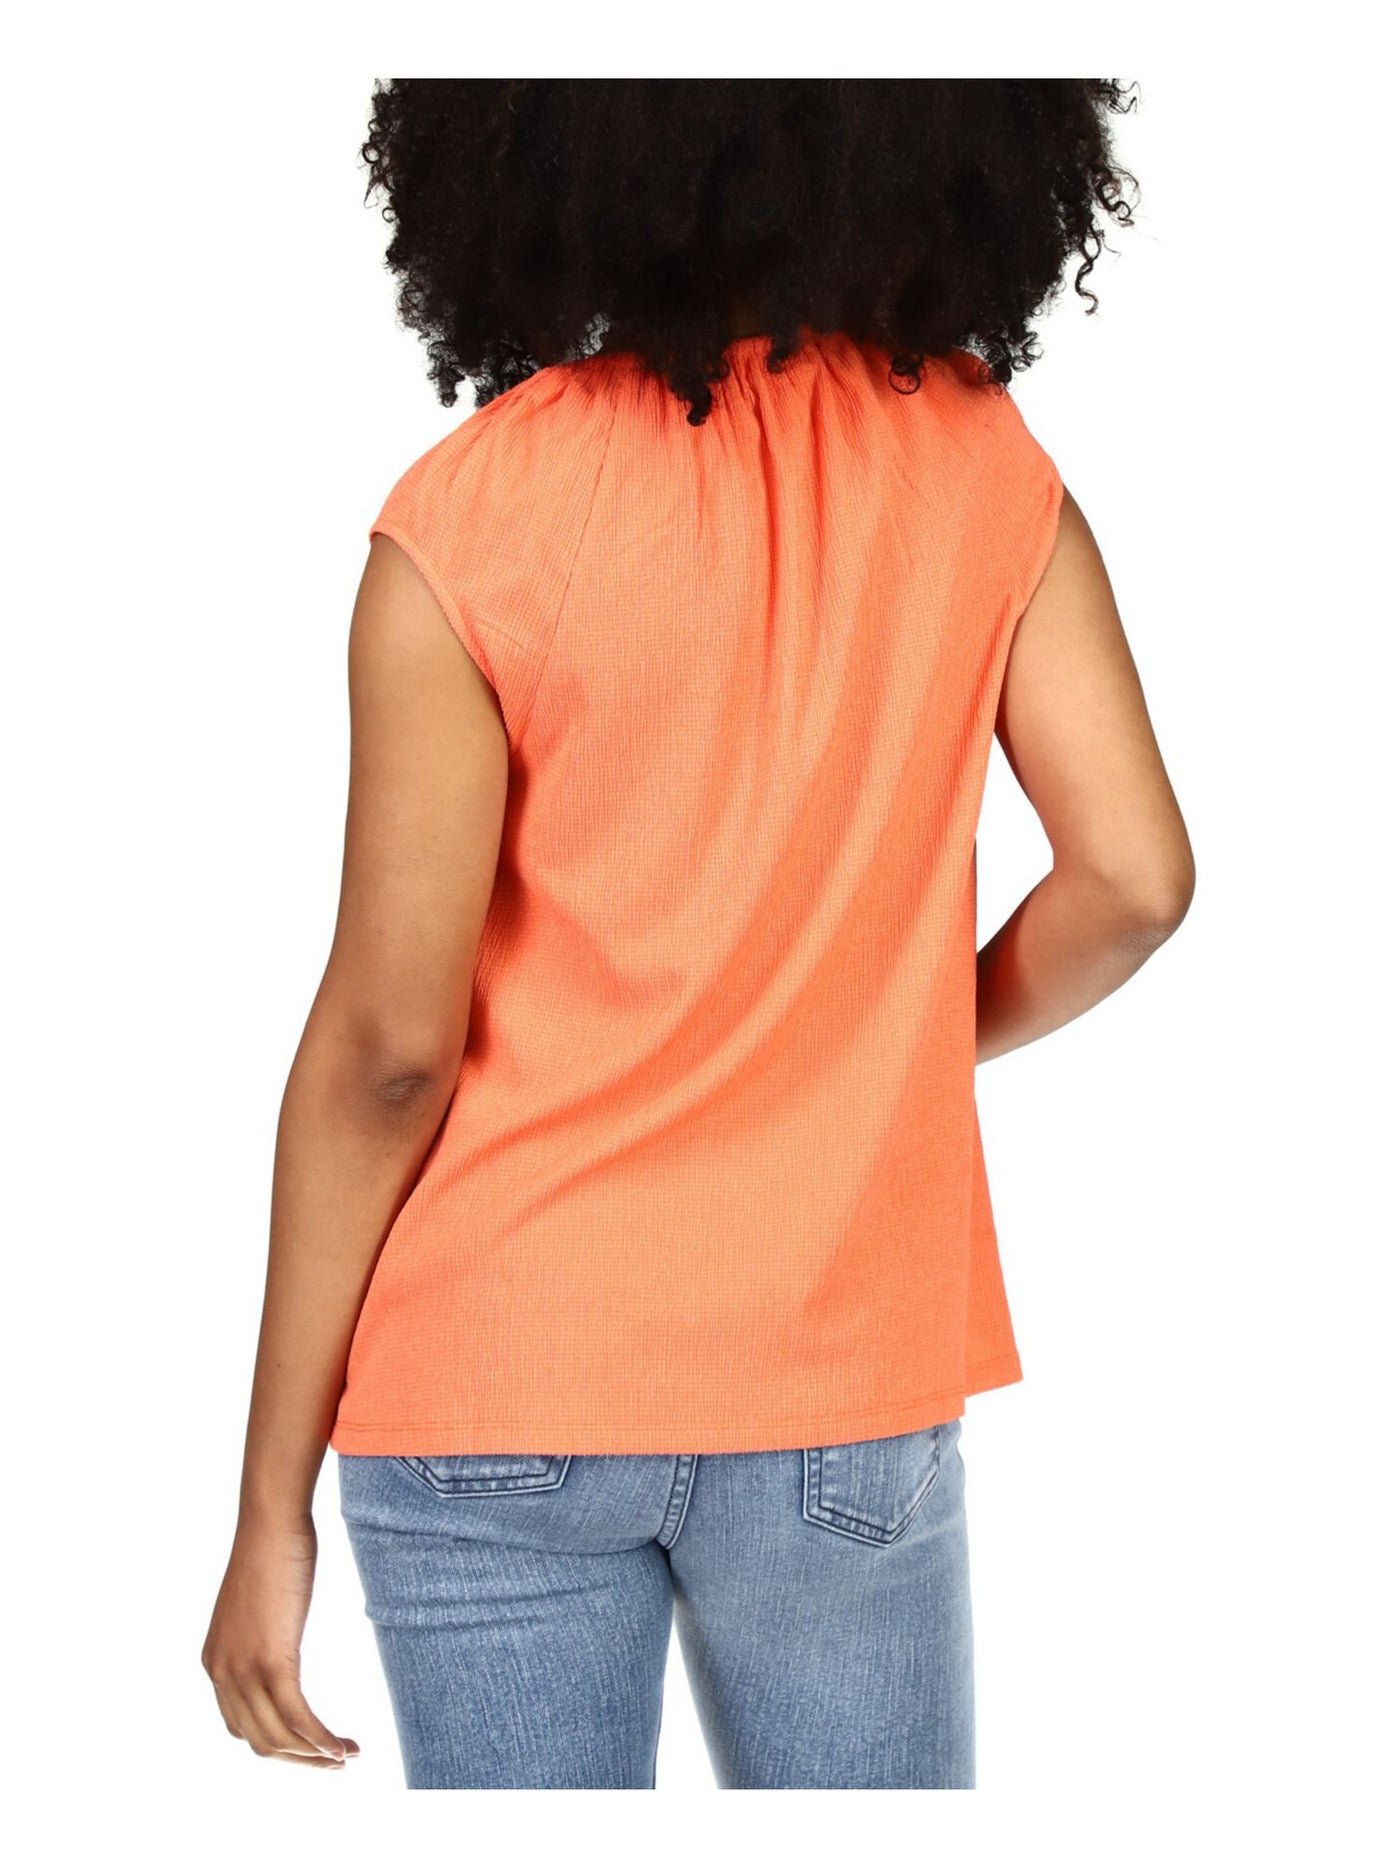 MICHAEL KORS Womens Orange Cut Out Tie Textured Cap Sleeve Scoop Neck Top L